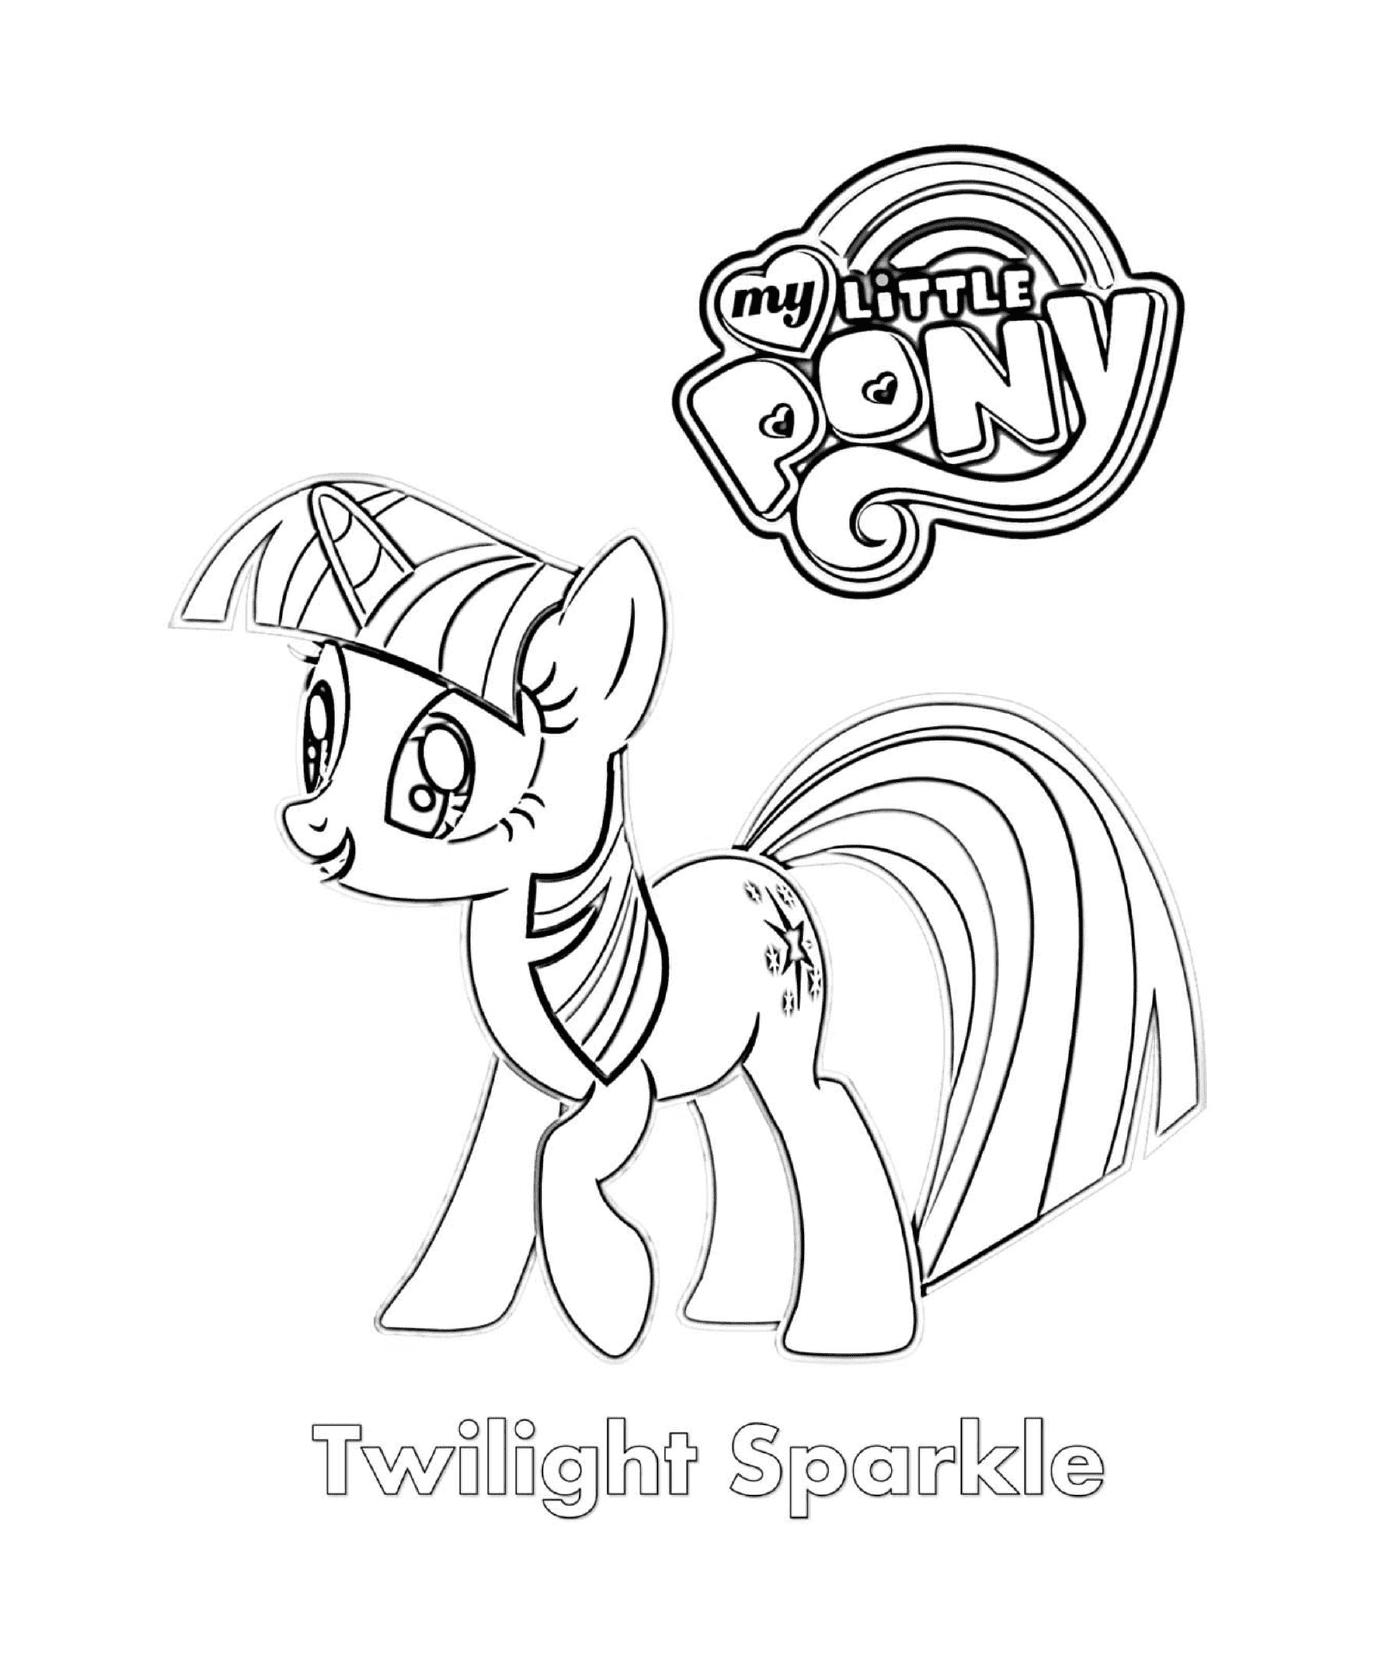  Twilight Sparkle, il pony chiamato Twilight Sparkle 